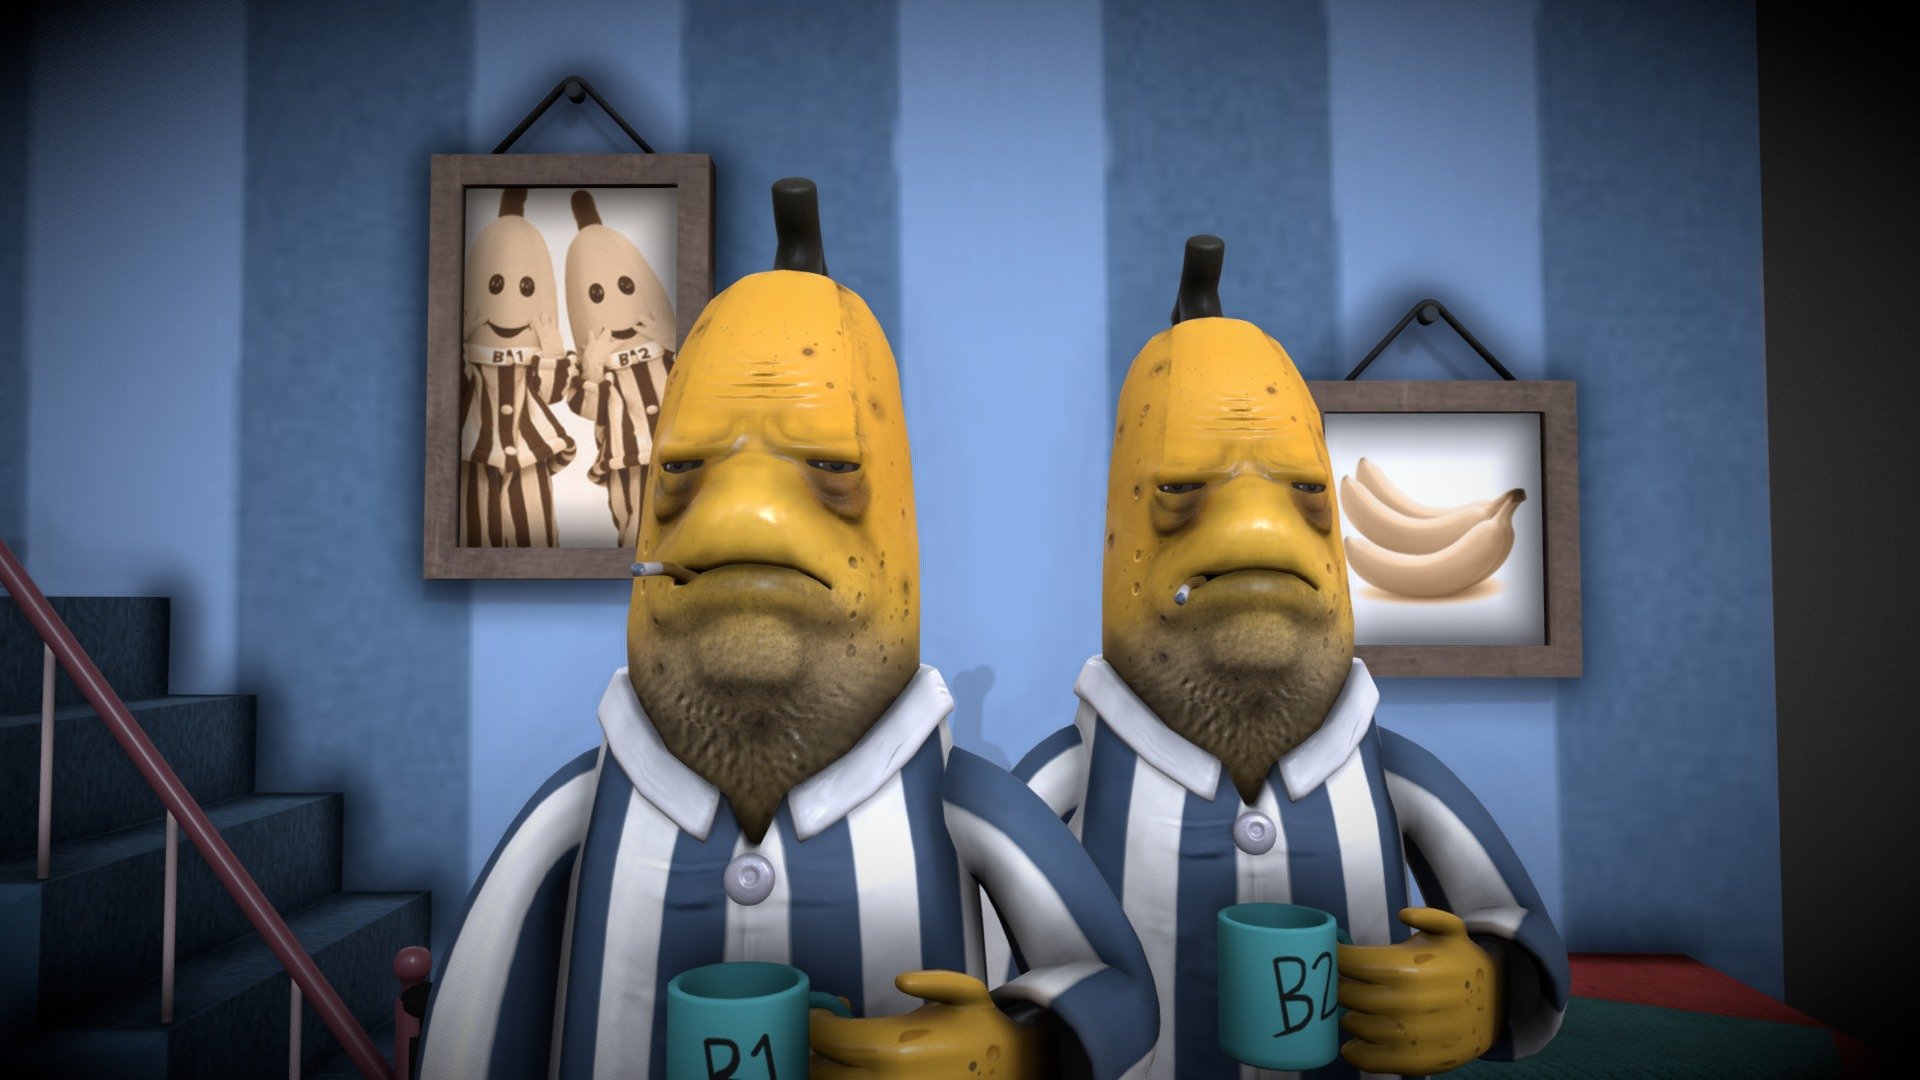 Bananas in Pyjamas Website –